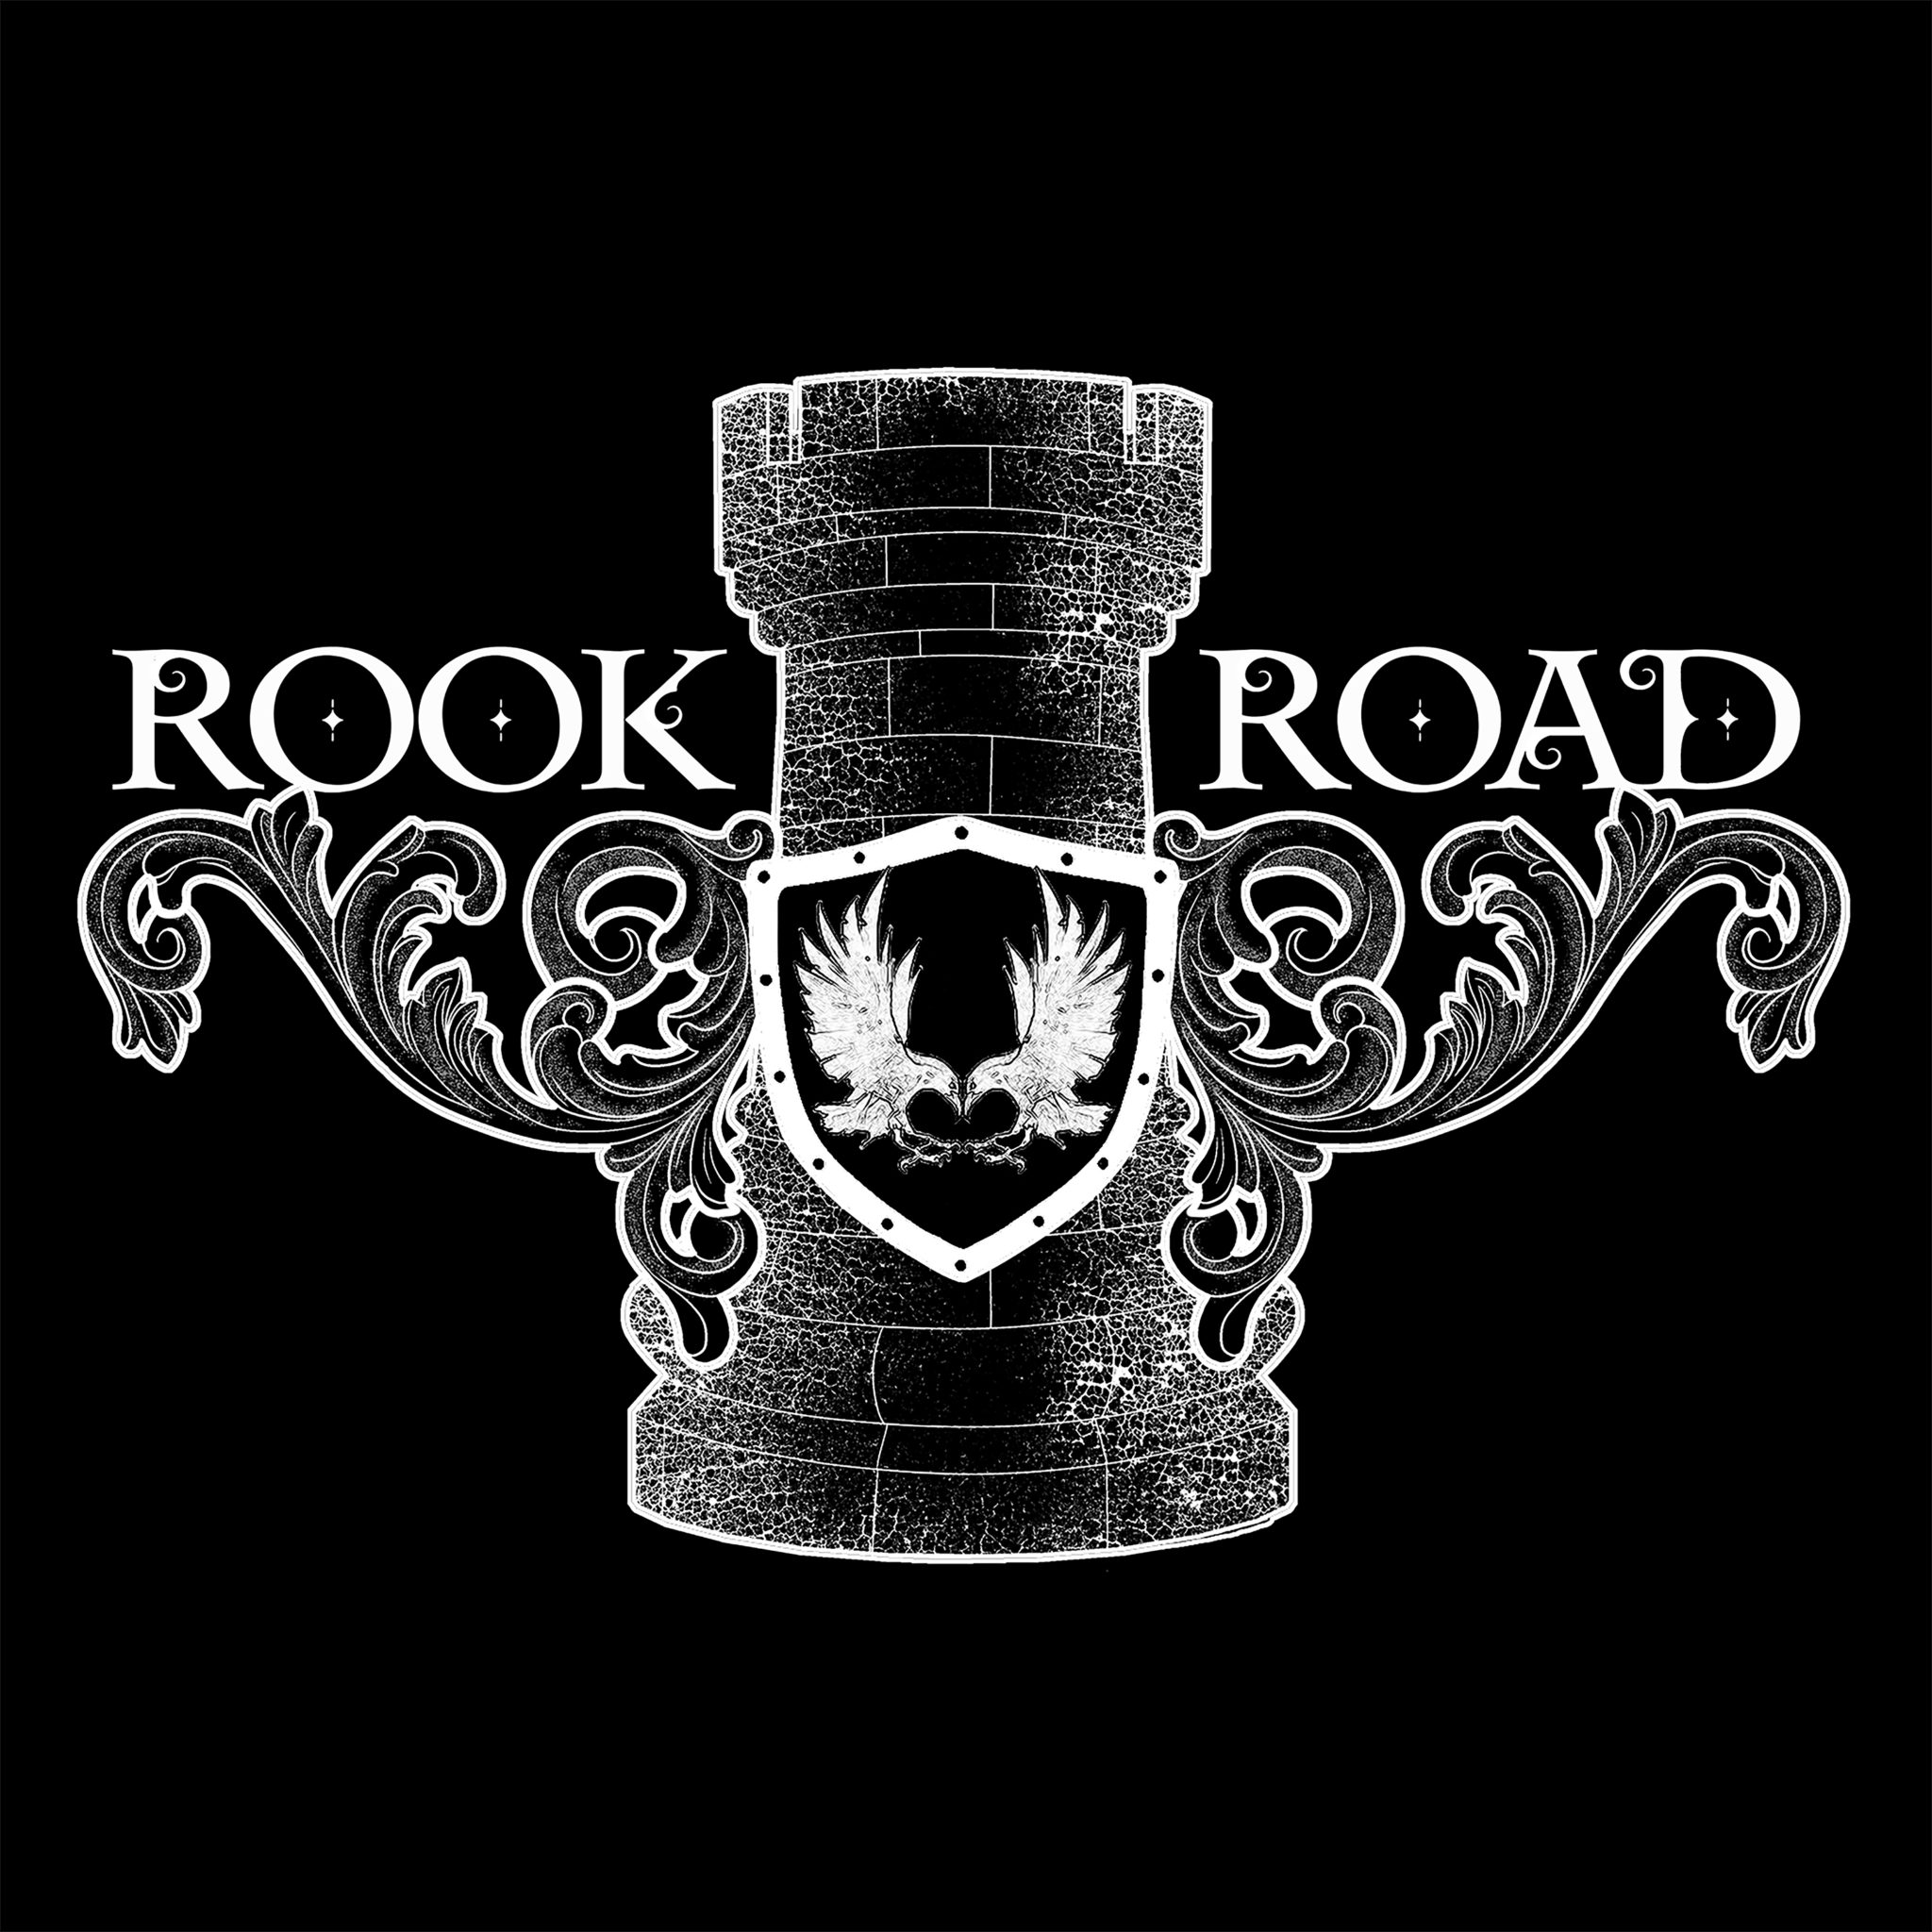 Cd roads. Rook Road lossless 2022. Rocki Roads 2022. Морхаус роуд (2022). Rook Road Rock Road 2022.